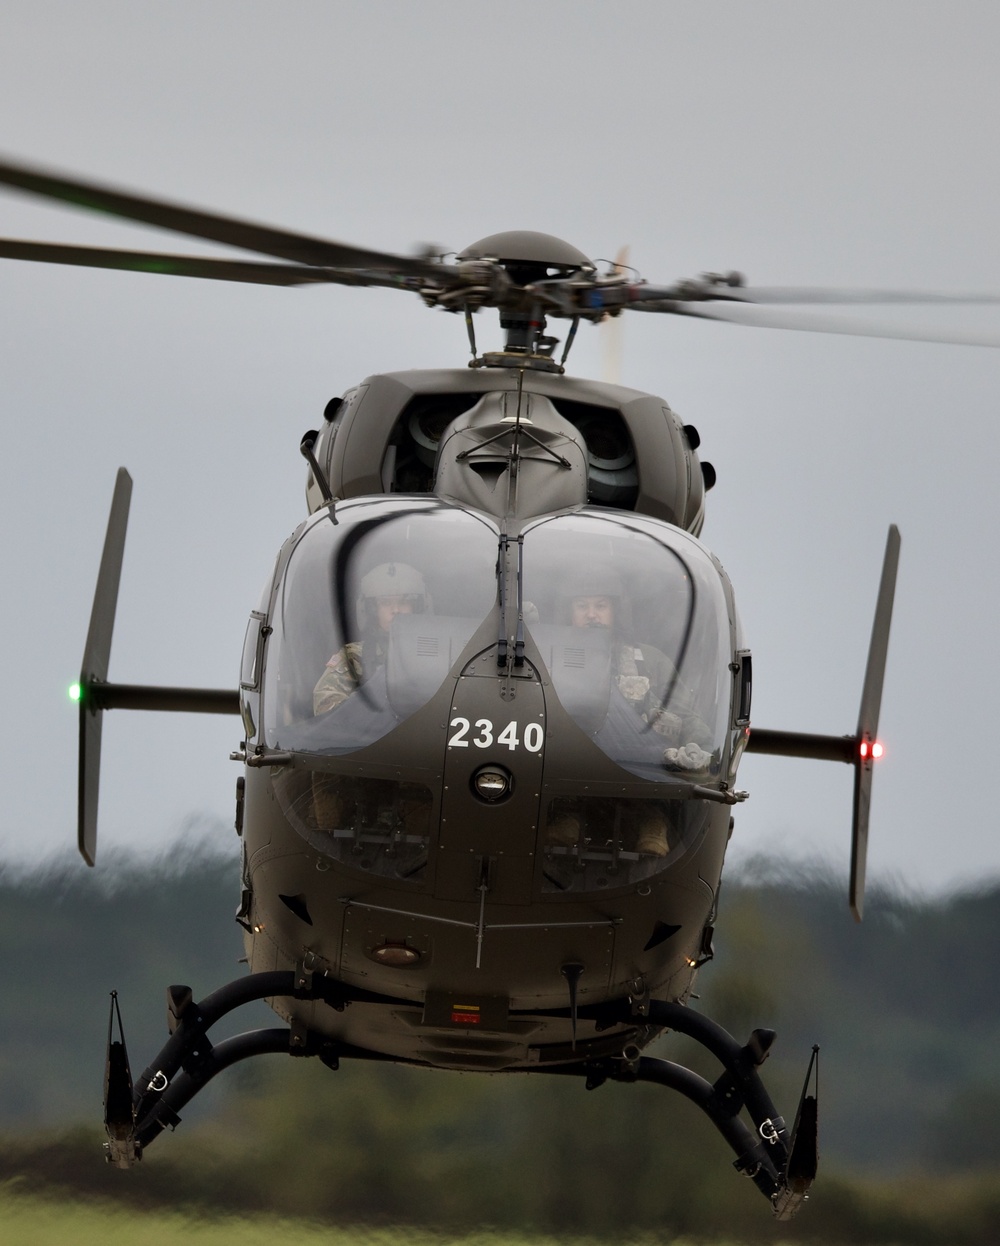 UH-72 Lakota Training